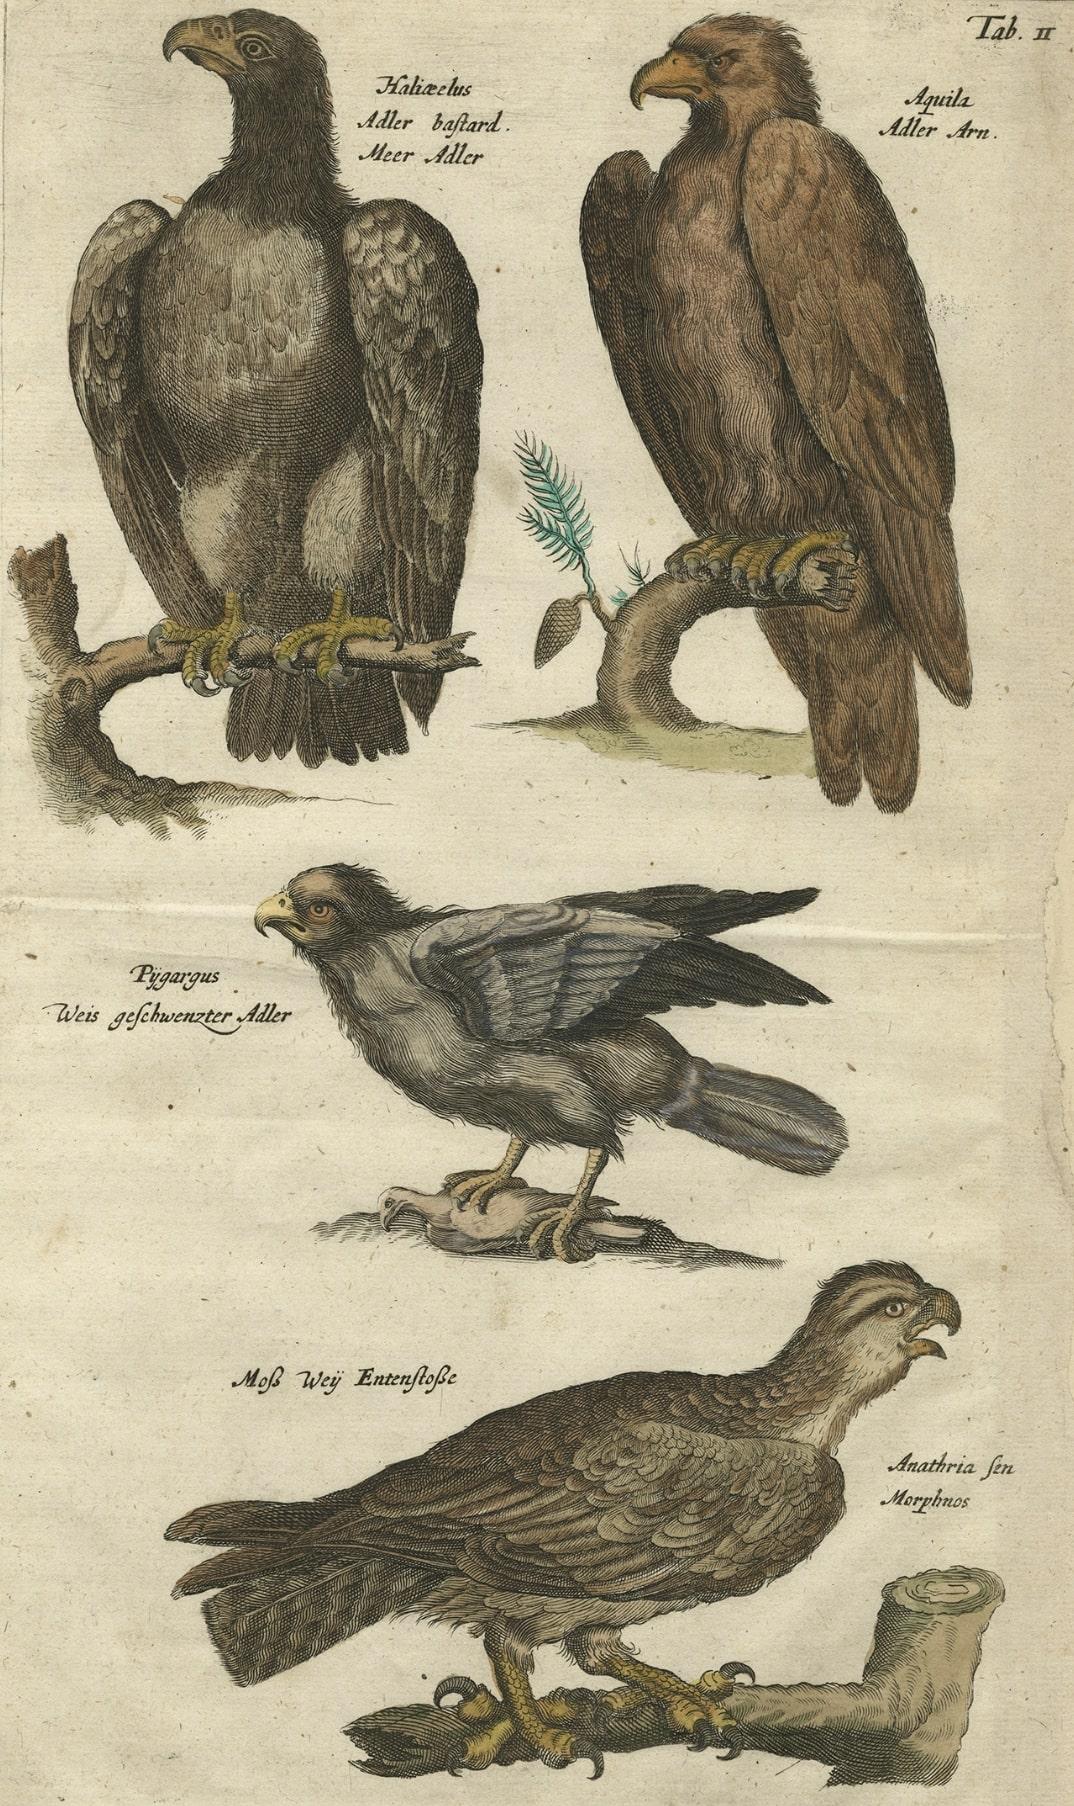 Antique print, titled: 'Haliaetus Adler (…).' - This plate shows various birds of prey; Haliaetus, Adler, Meer Adler (White-tailed Eagle, Sea Eagle) - Aquila, Adler (Eagles species) - Pygargus, Weis geschwenzter Adler (Harrier) - Anathria seu